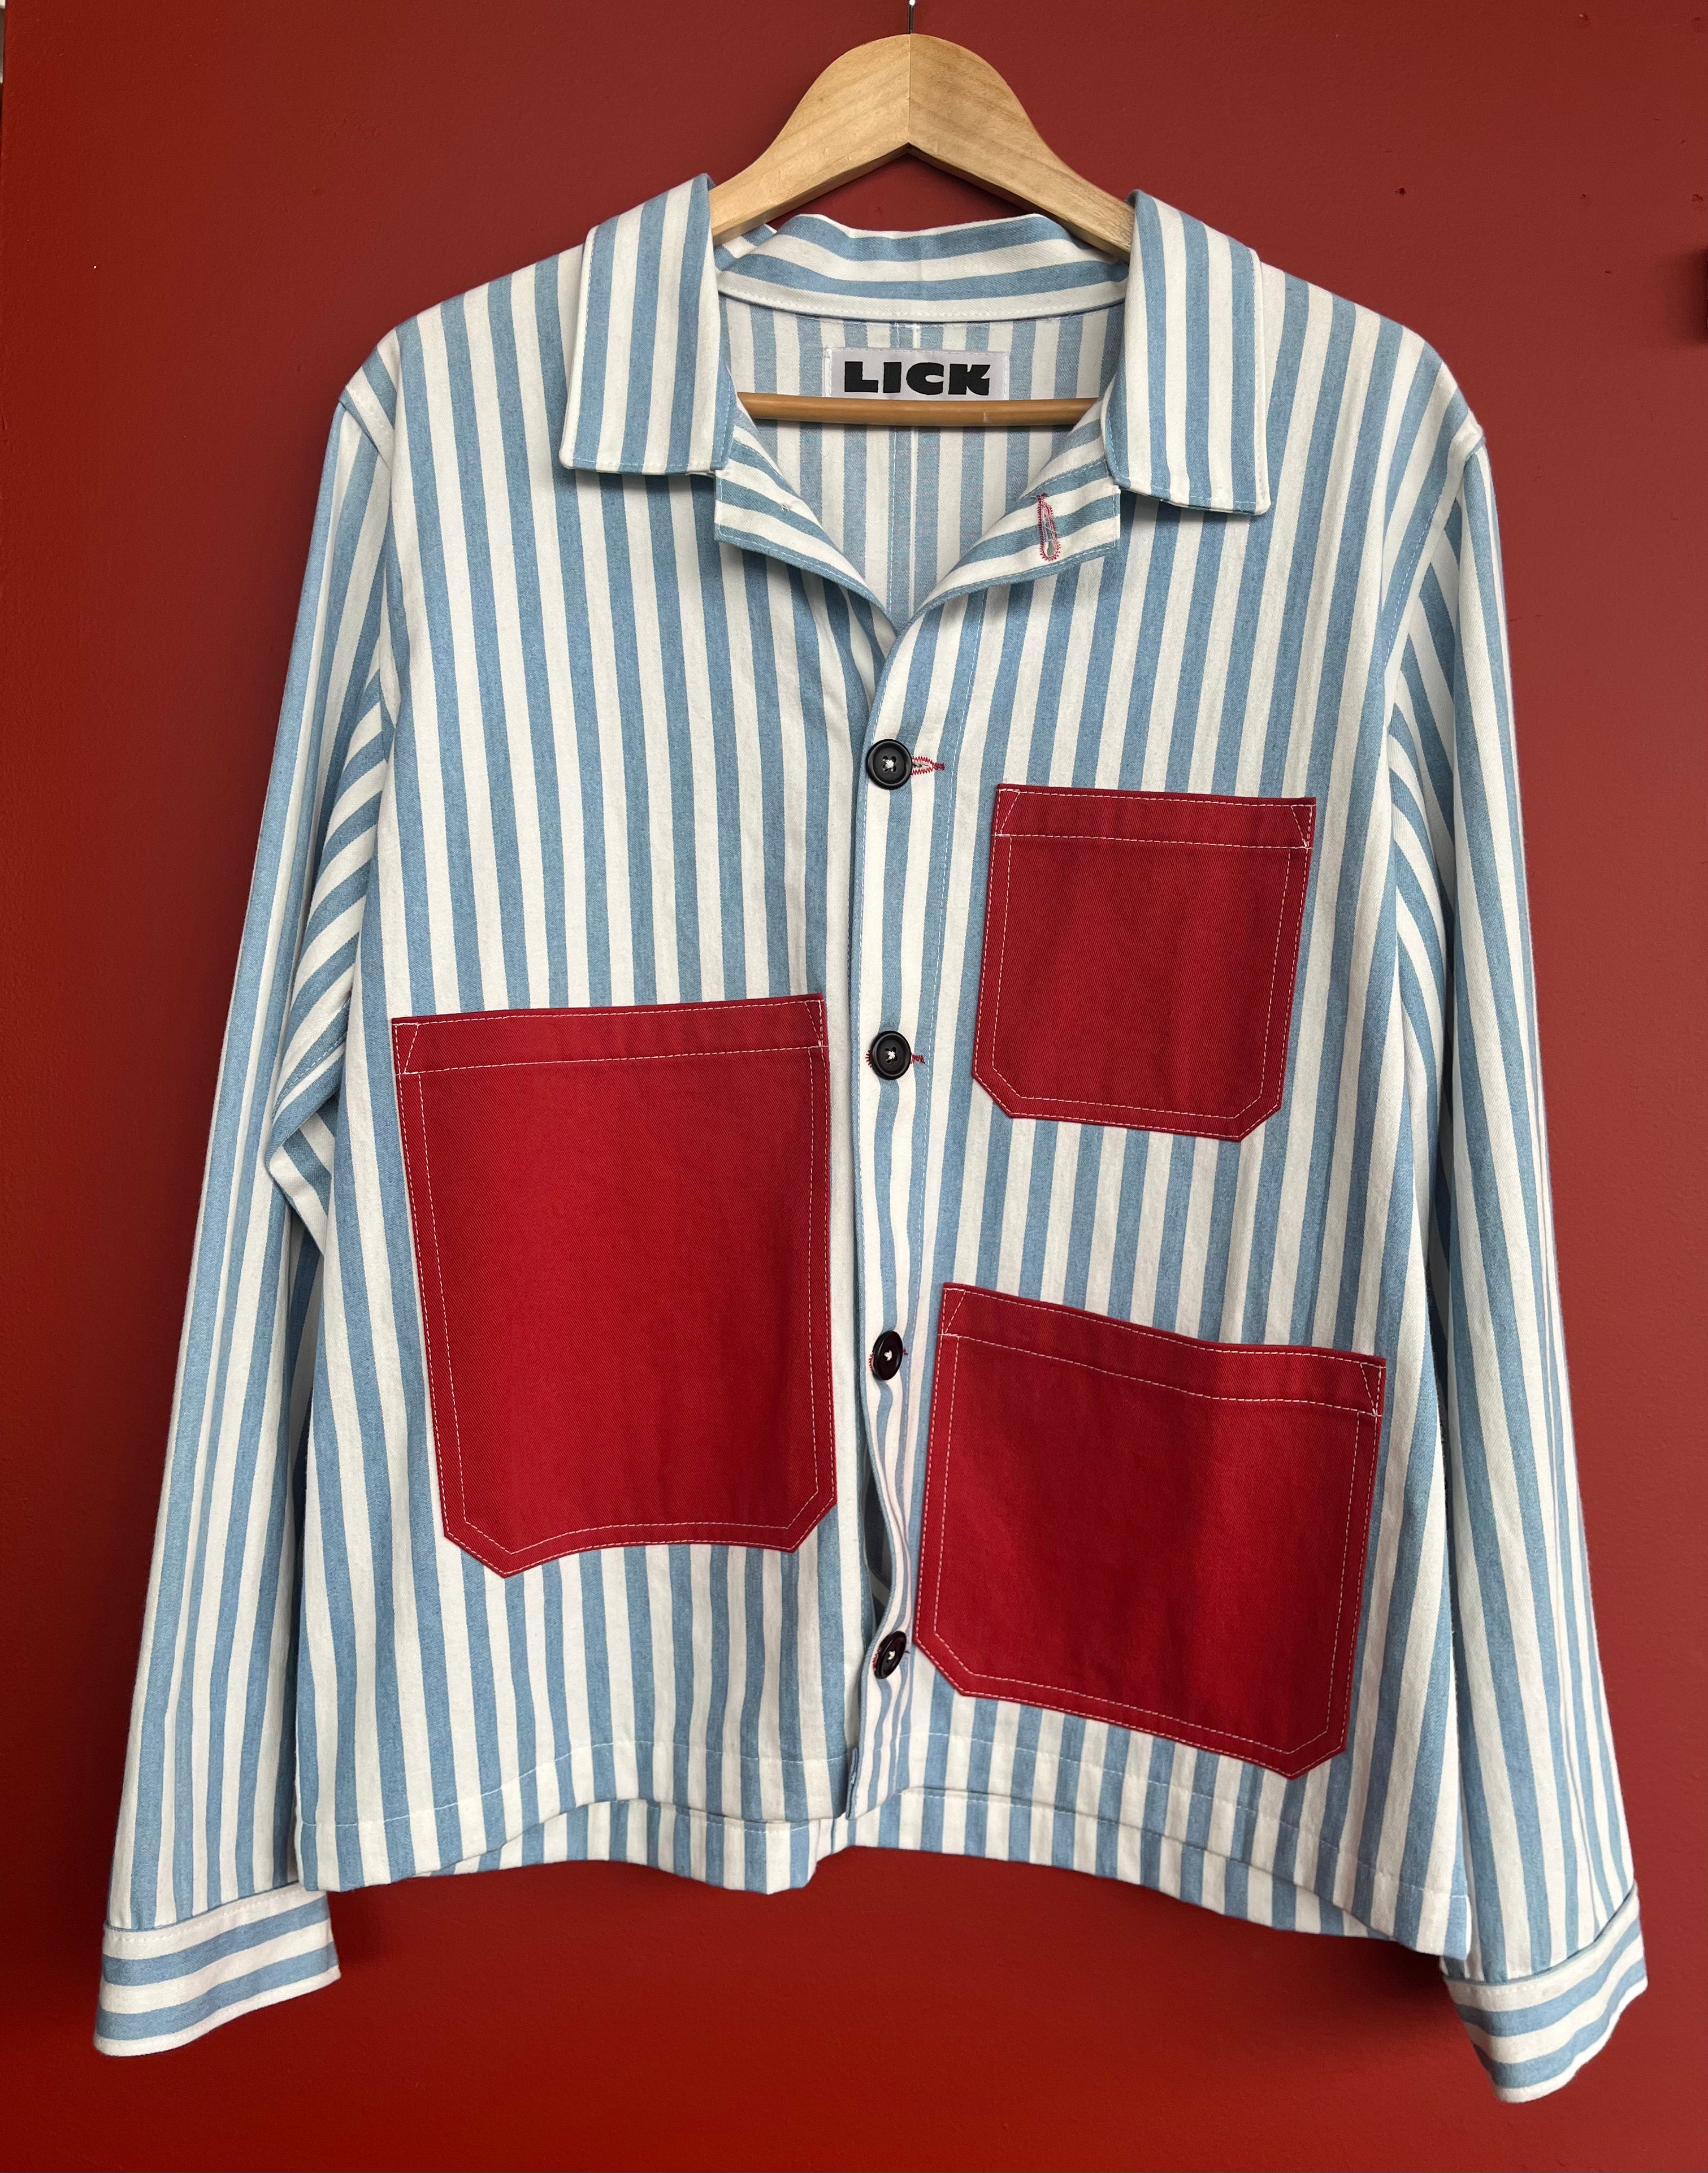 Lick Clothing - Chore Coat Blue Stripe